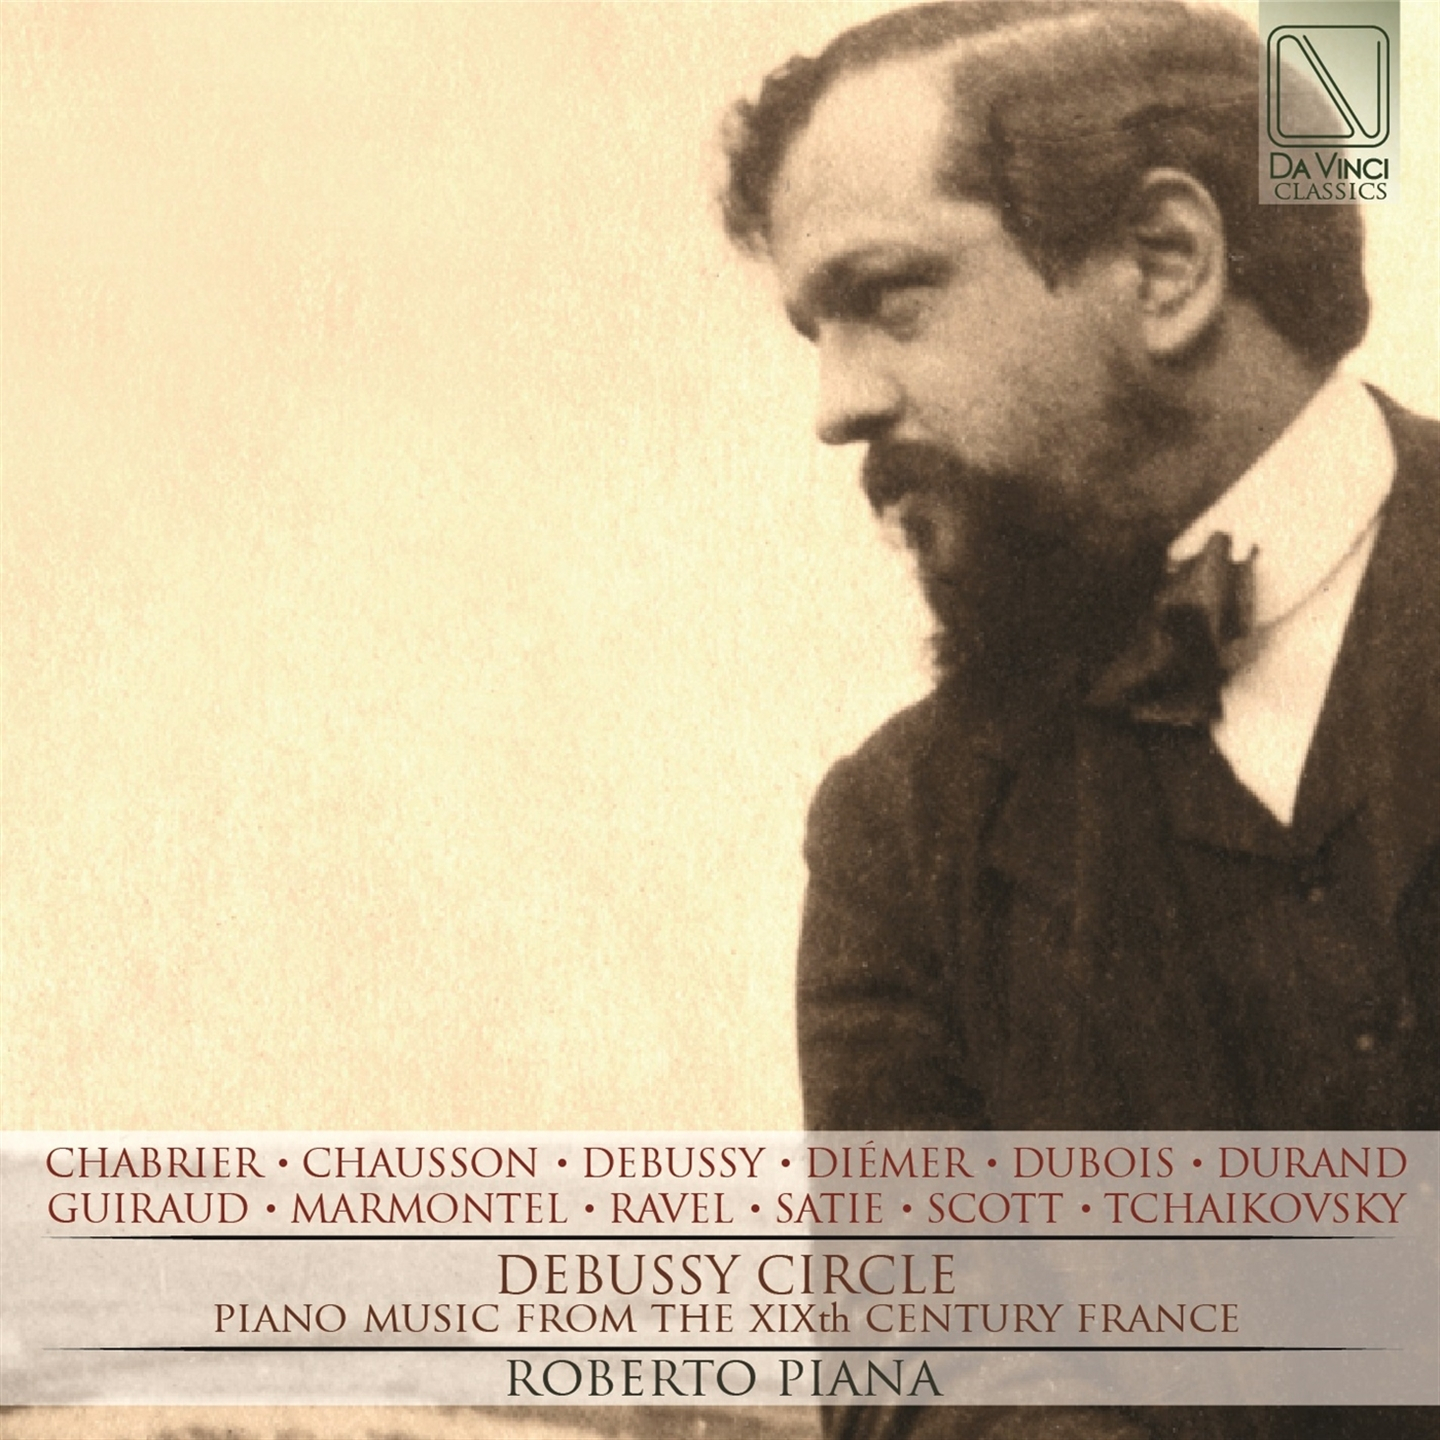 Roberto Piana - Debussy Circle - Bild 1 von 1